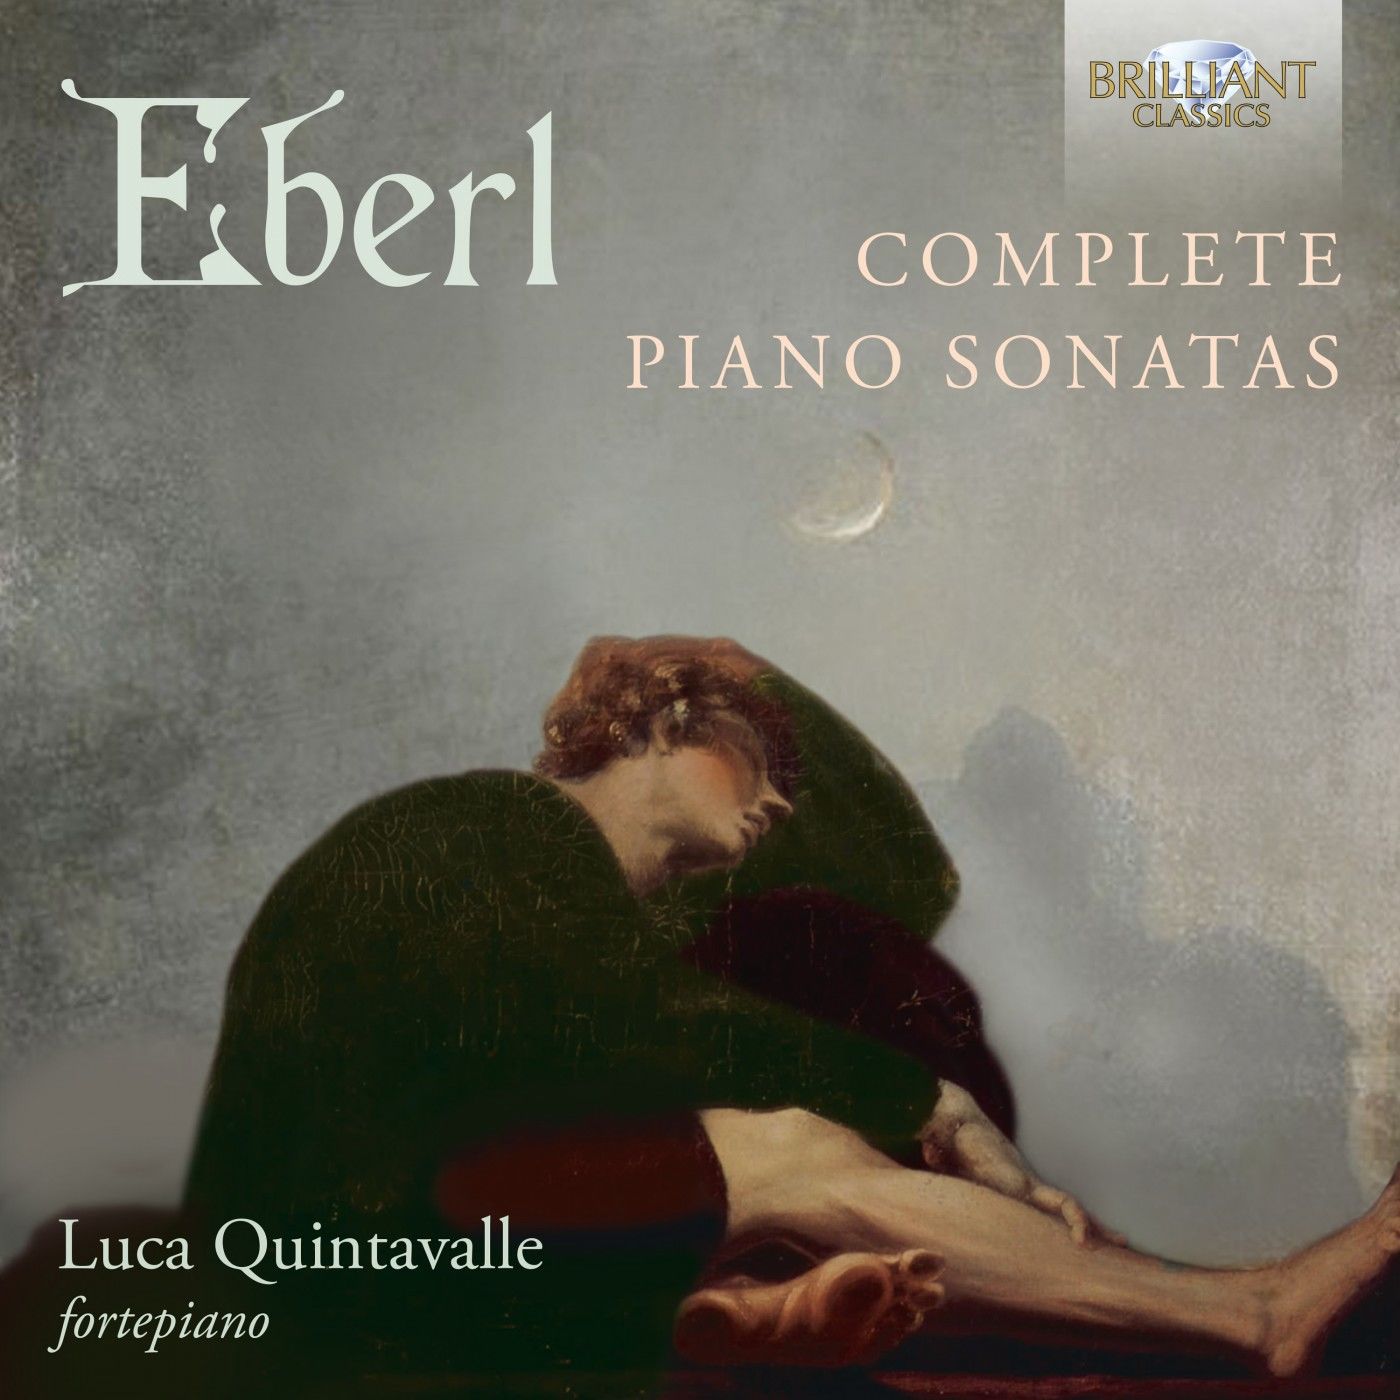 Luca Quintavalle - Eberl Complete Piano Sonatas (2019) [FLAC 24bit/96kHz]